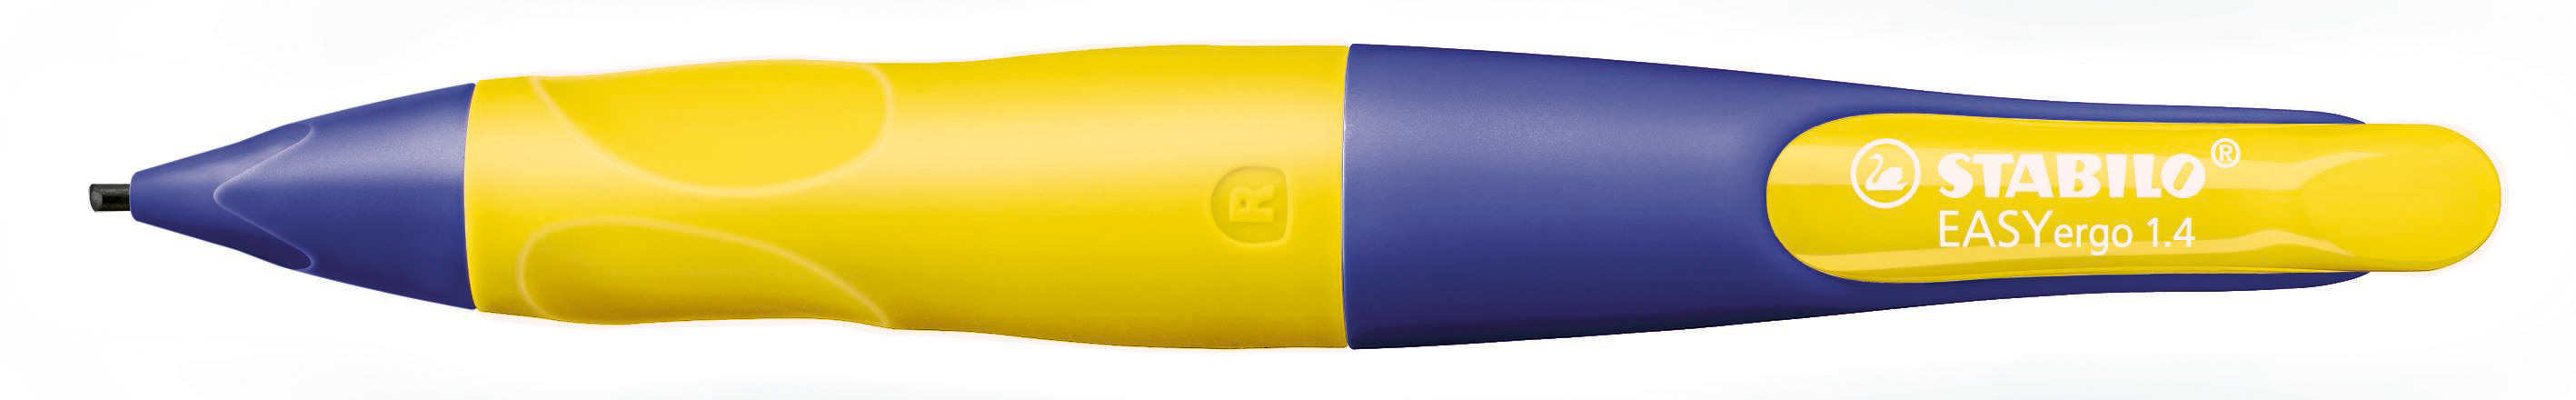 STABILO EASYergo Start R 1,4mm B-46896-5 violet/neonjaune